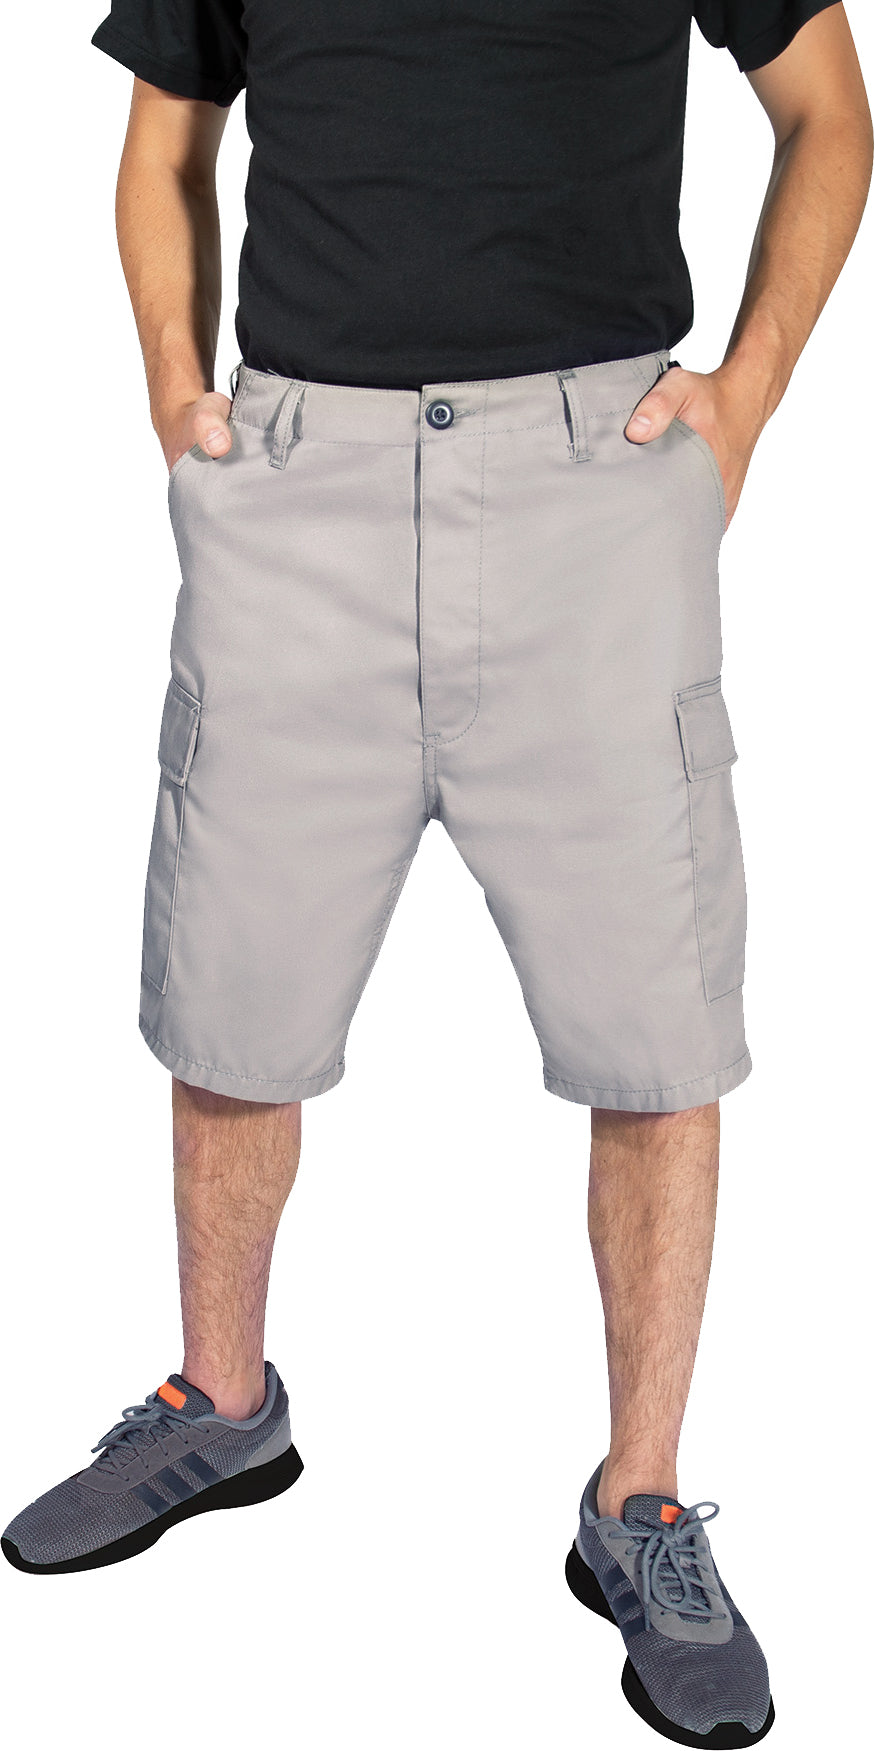 Grey - Tactical BDU Shorts Military Camo Cargo Shorts